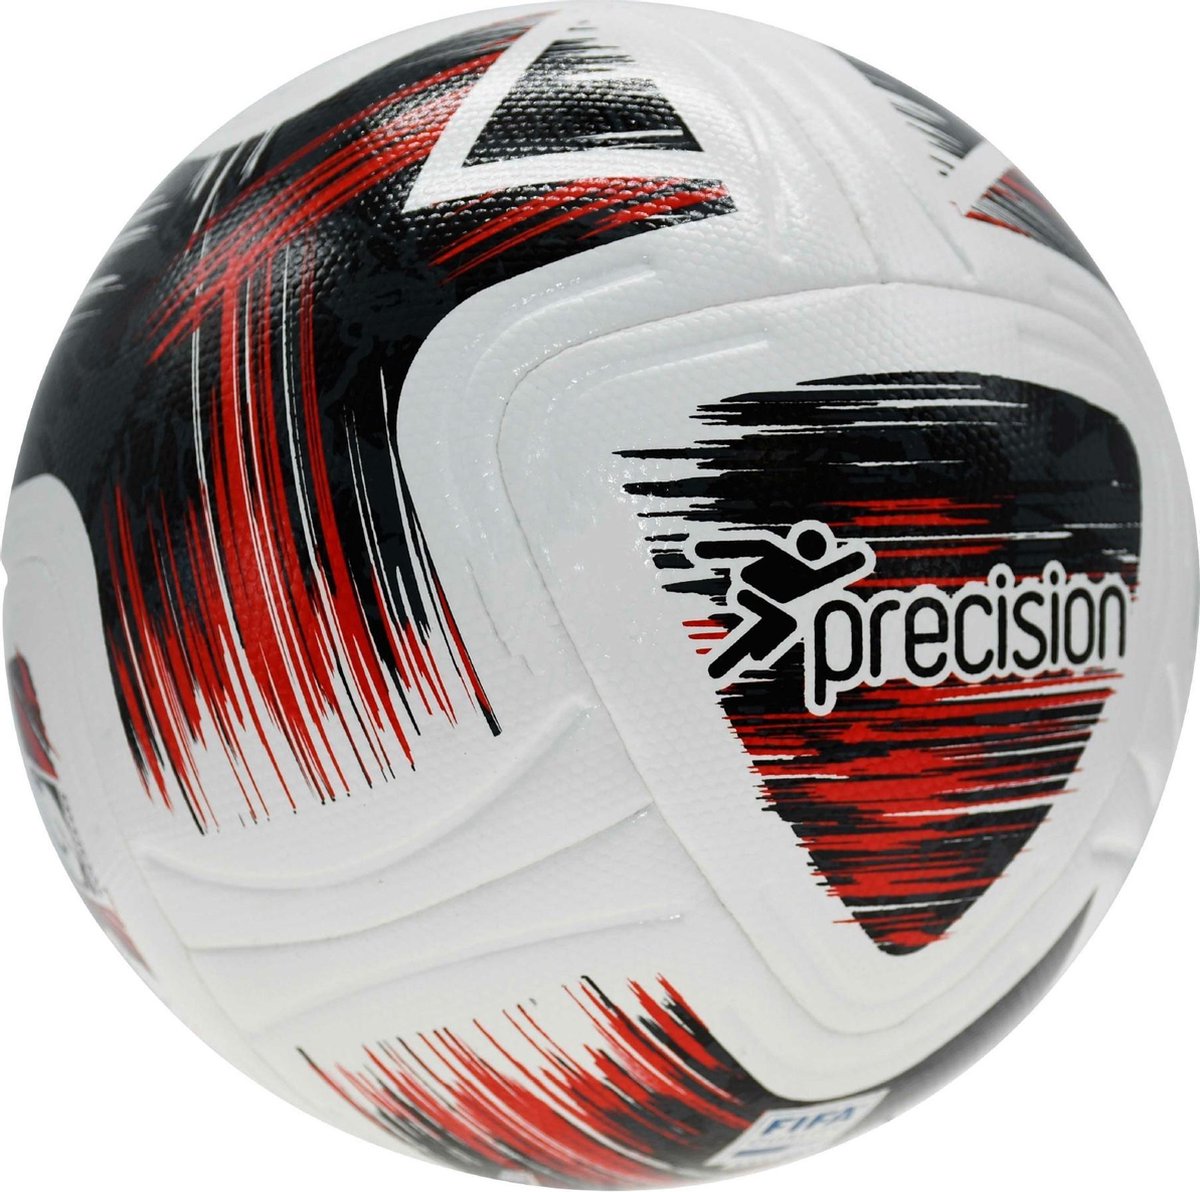 Precision Voetbal Nueno Fifa Latex/polyurethaan Wit/rood Maat 5